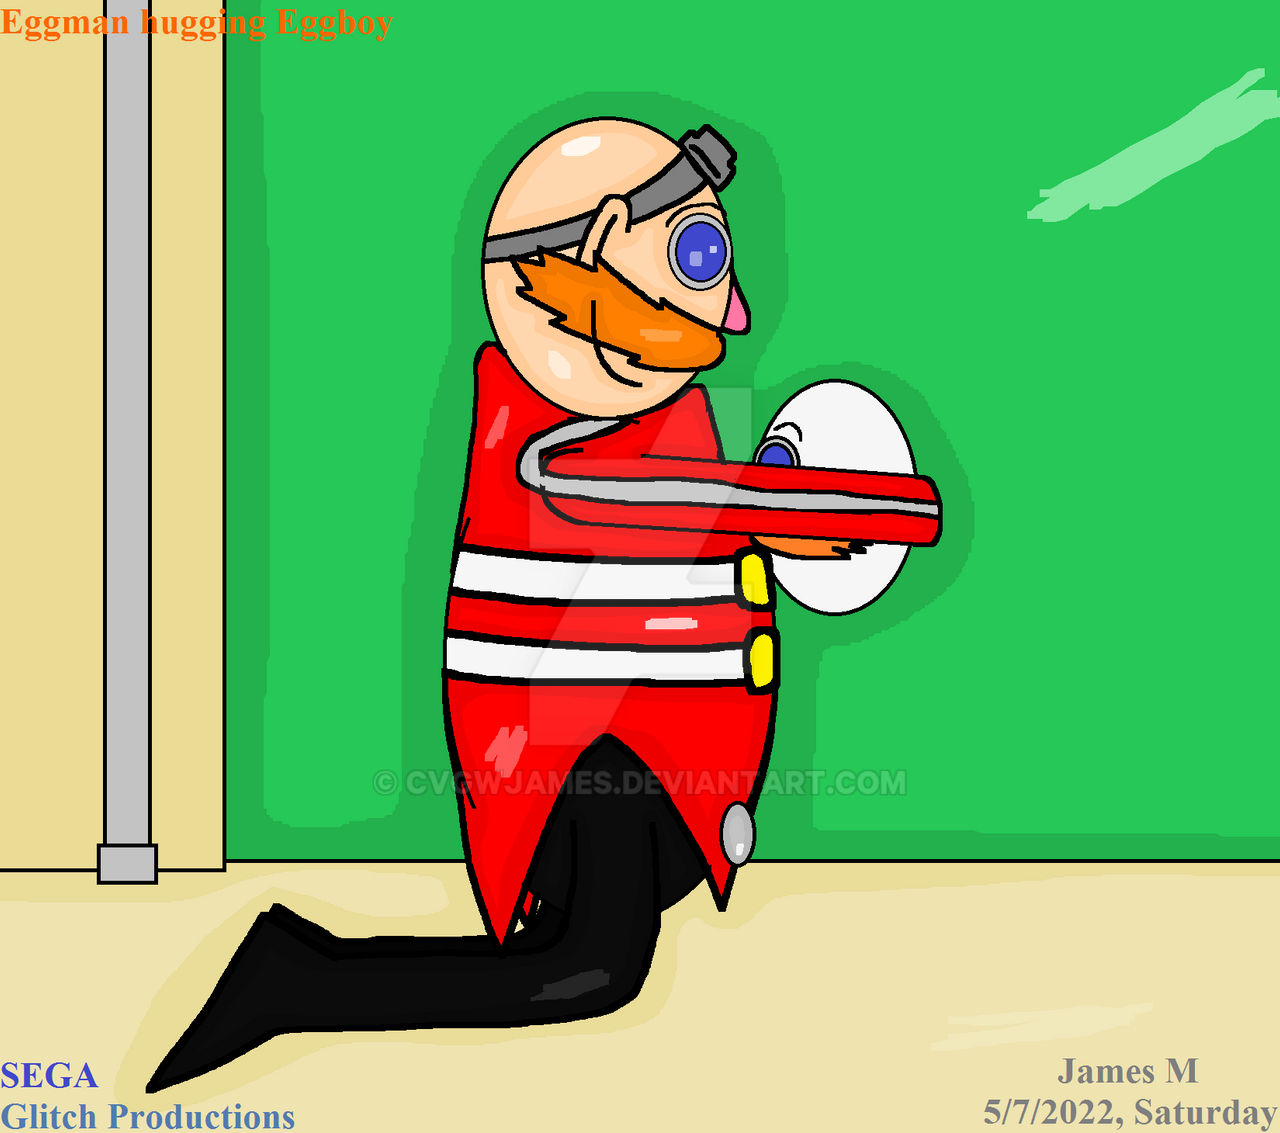 Starved Eggman gets Eggman's turkey (by James M) by cvgwjames on DeviantArt